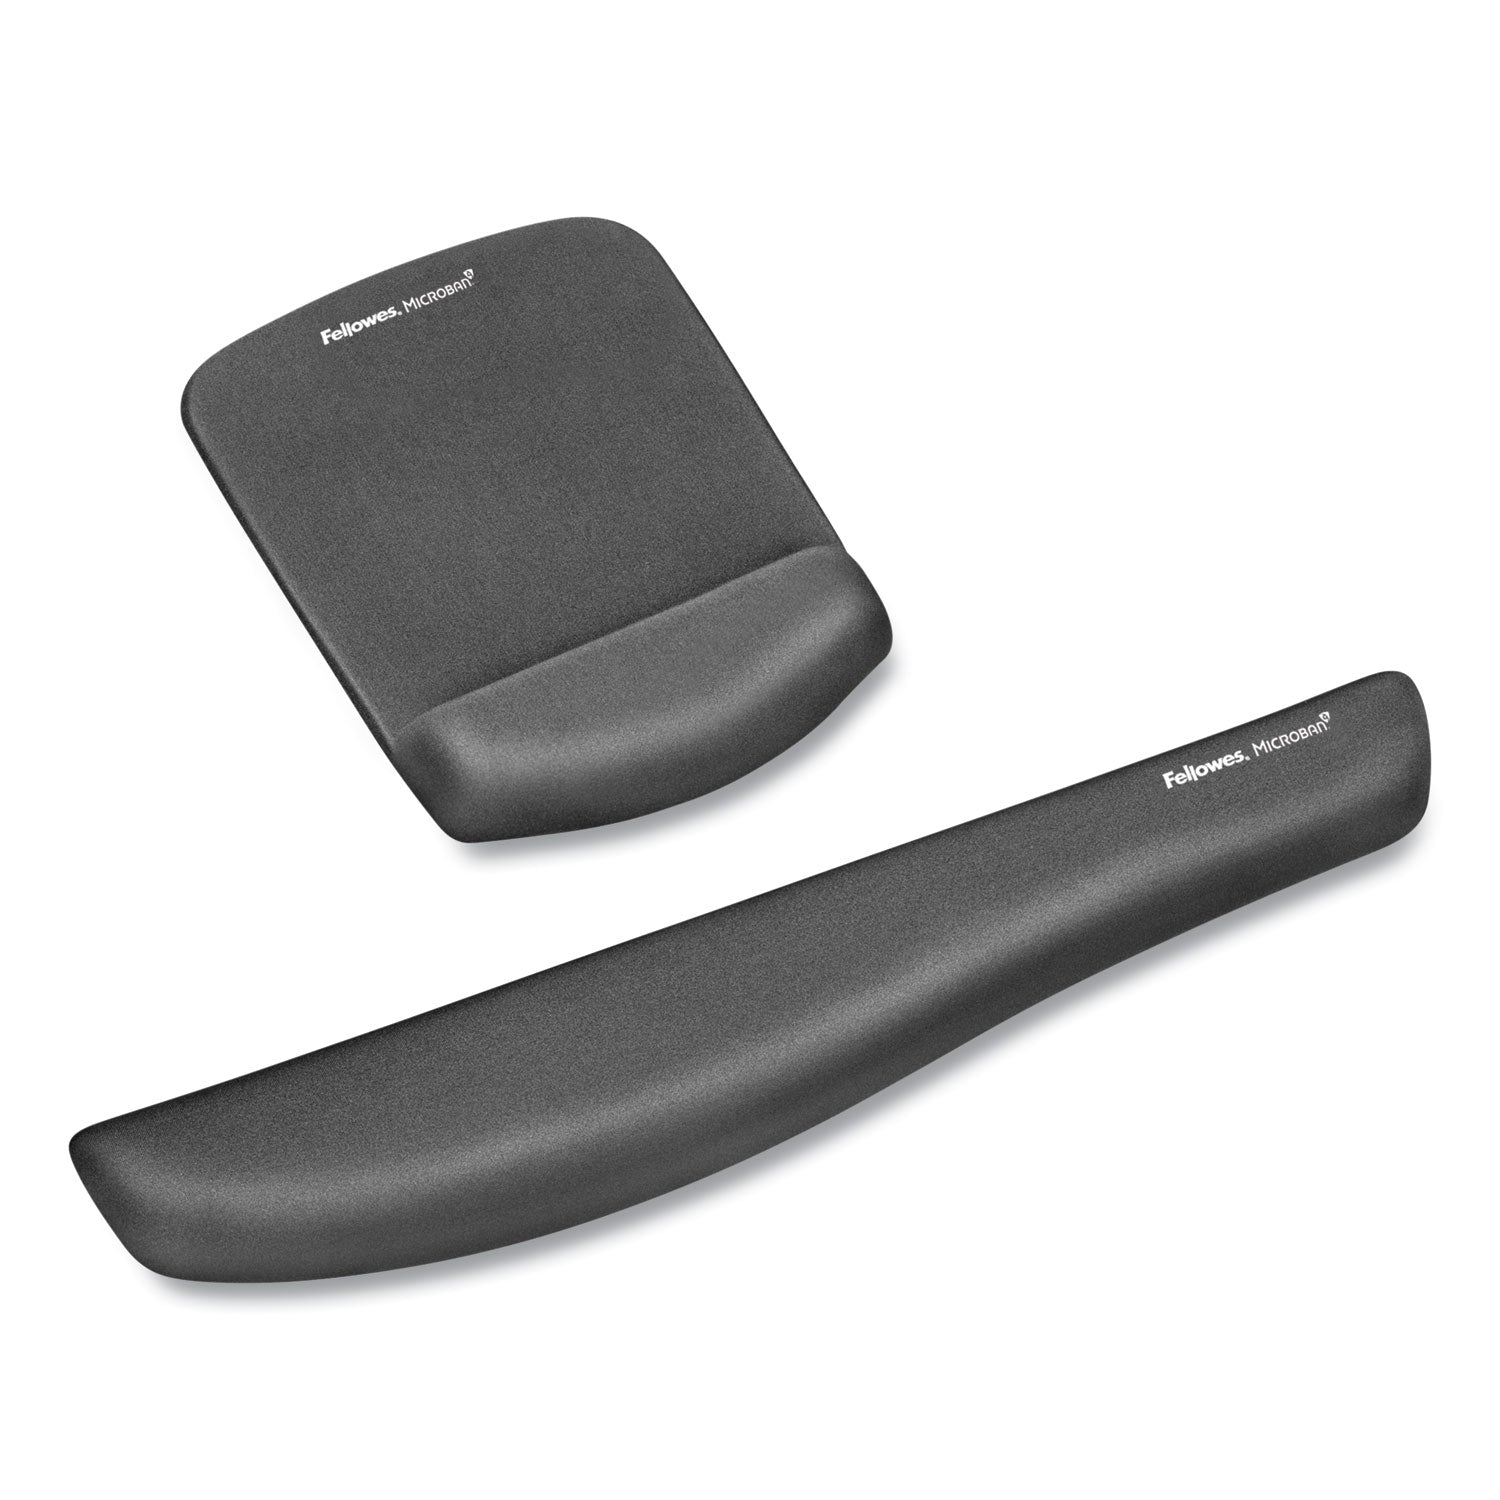 PlushTouch Mouse Pad with Wrist Rest, 7.25 x 9.37, Graphite - 